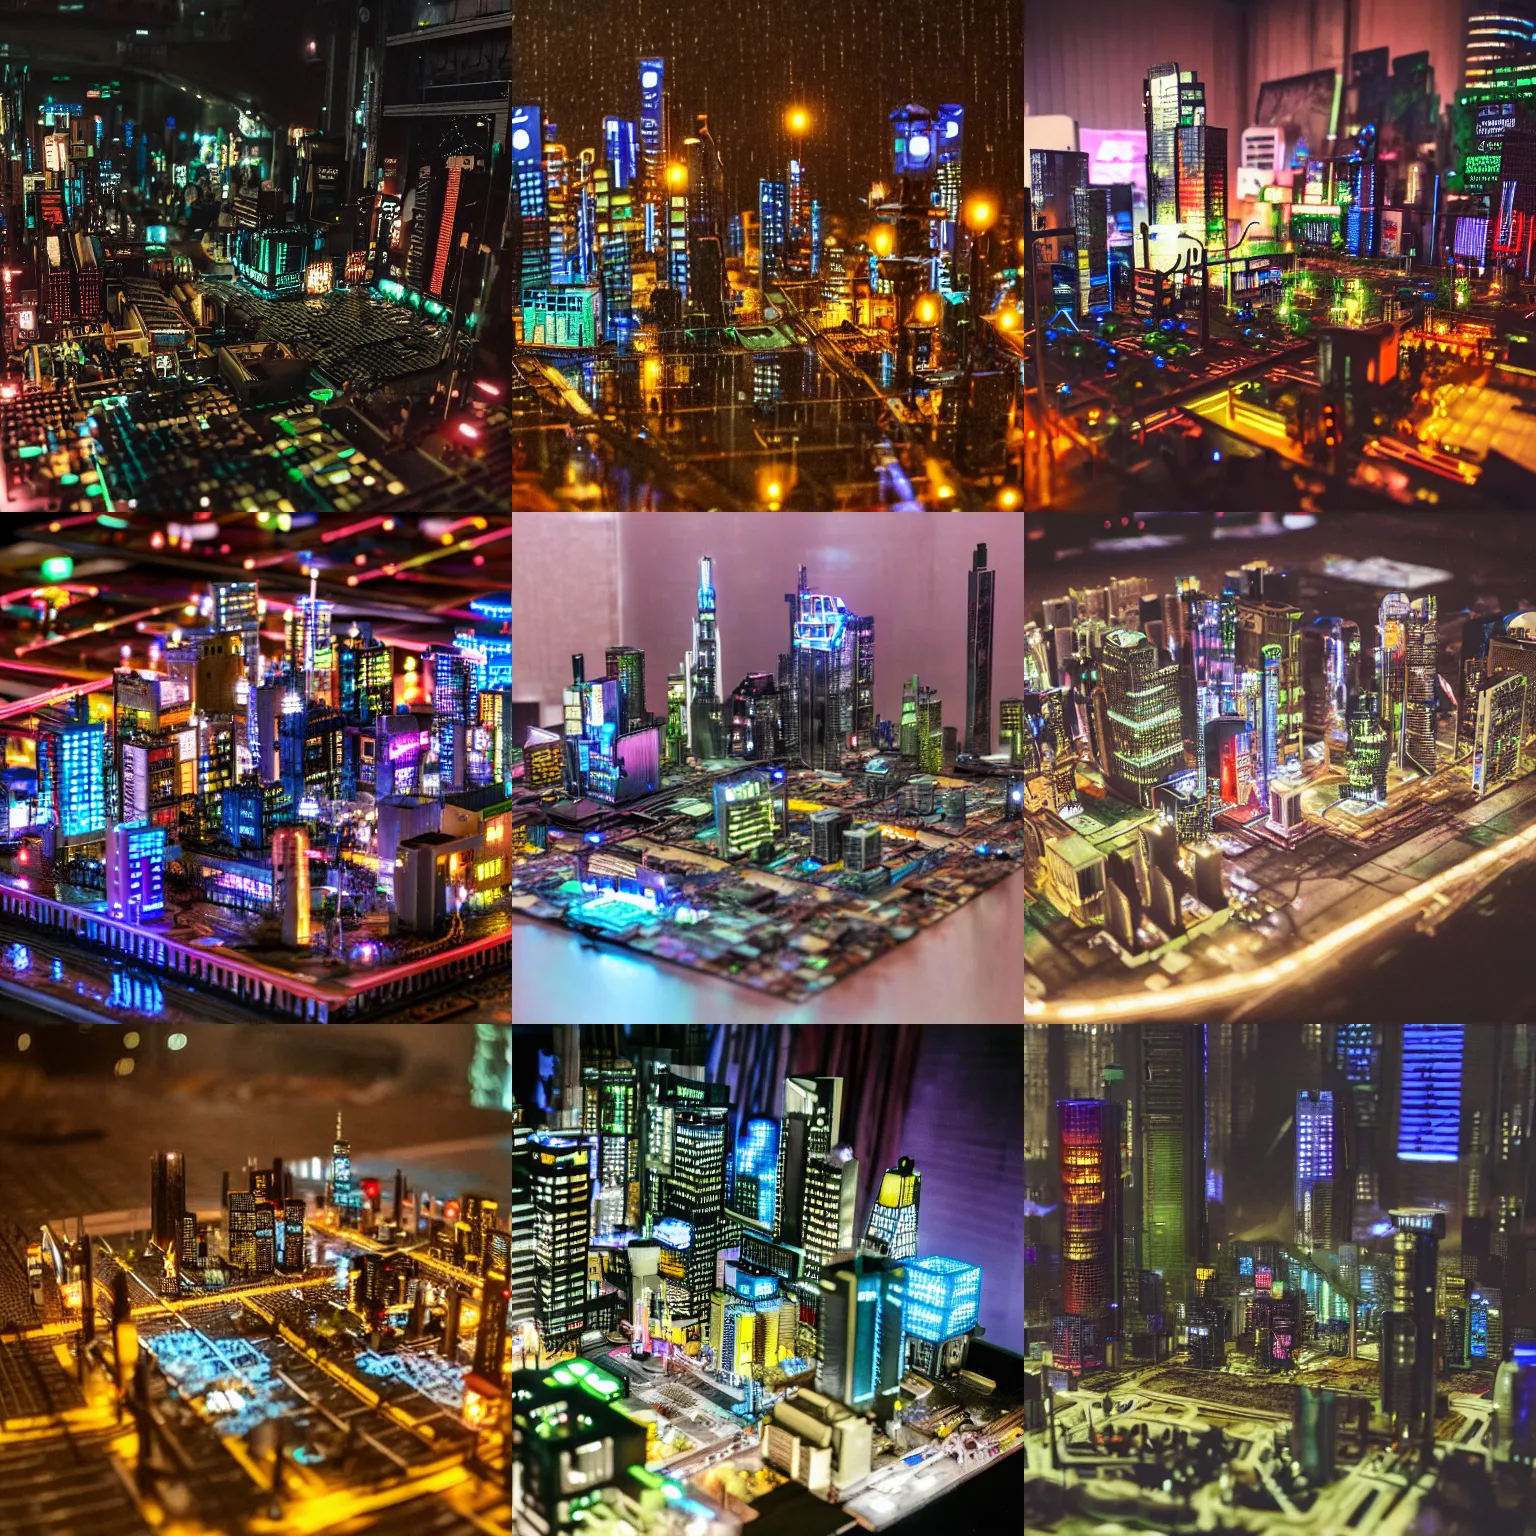 Prompt: miniature model of a cyberpunk city on a rainy night